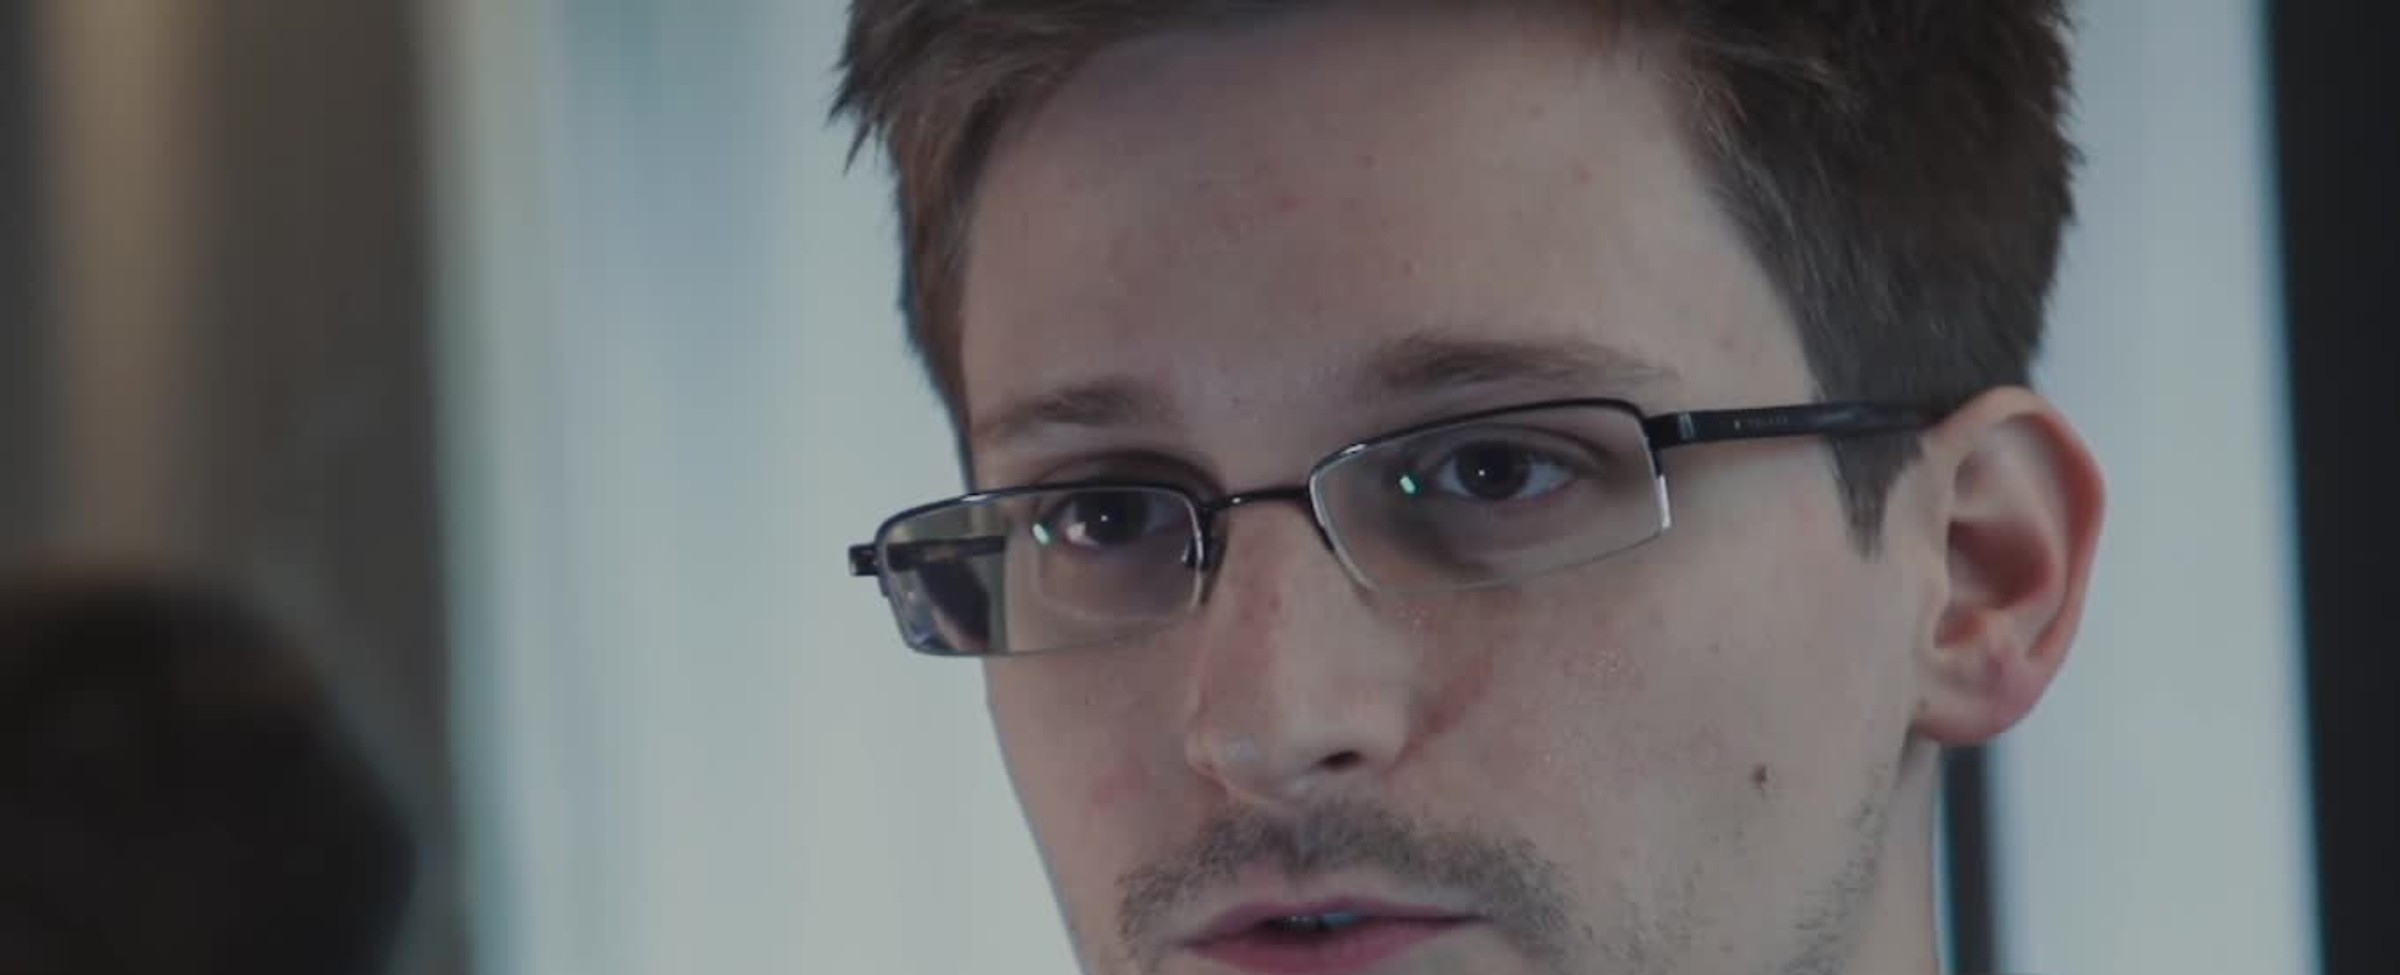 Edward Snowden - Hrdina nebo špión?